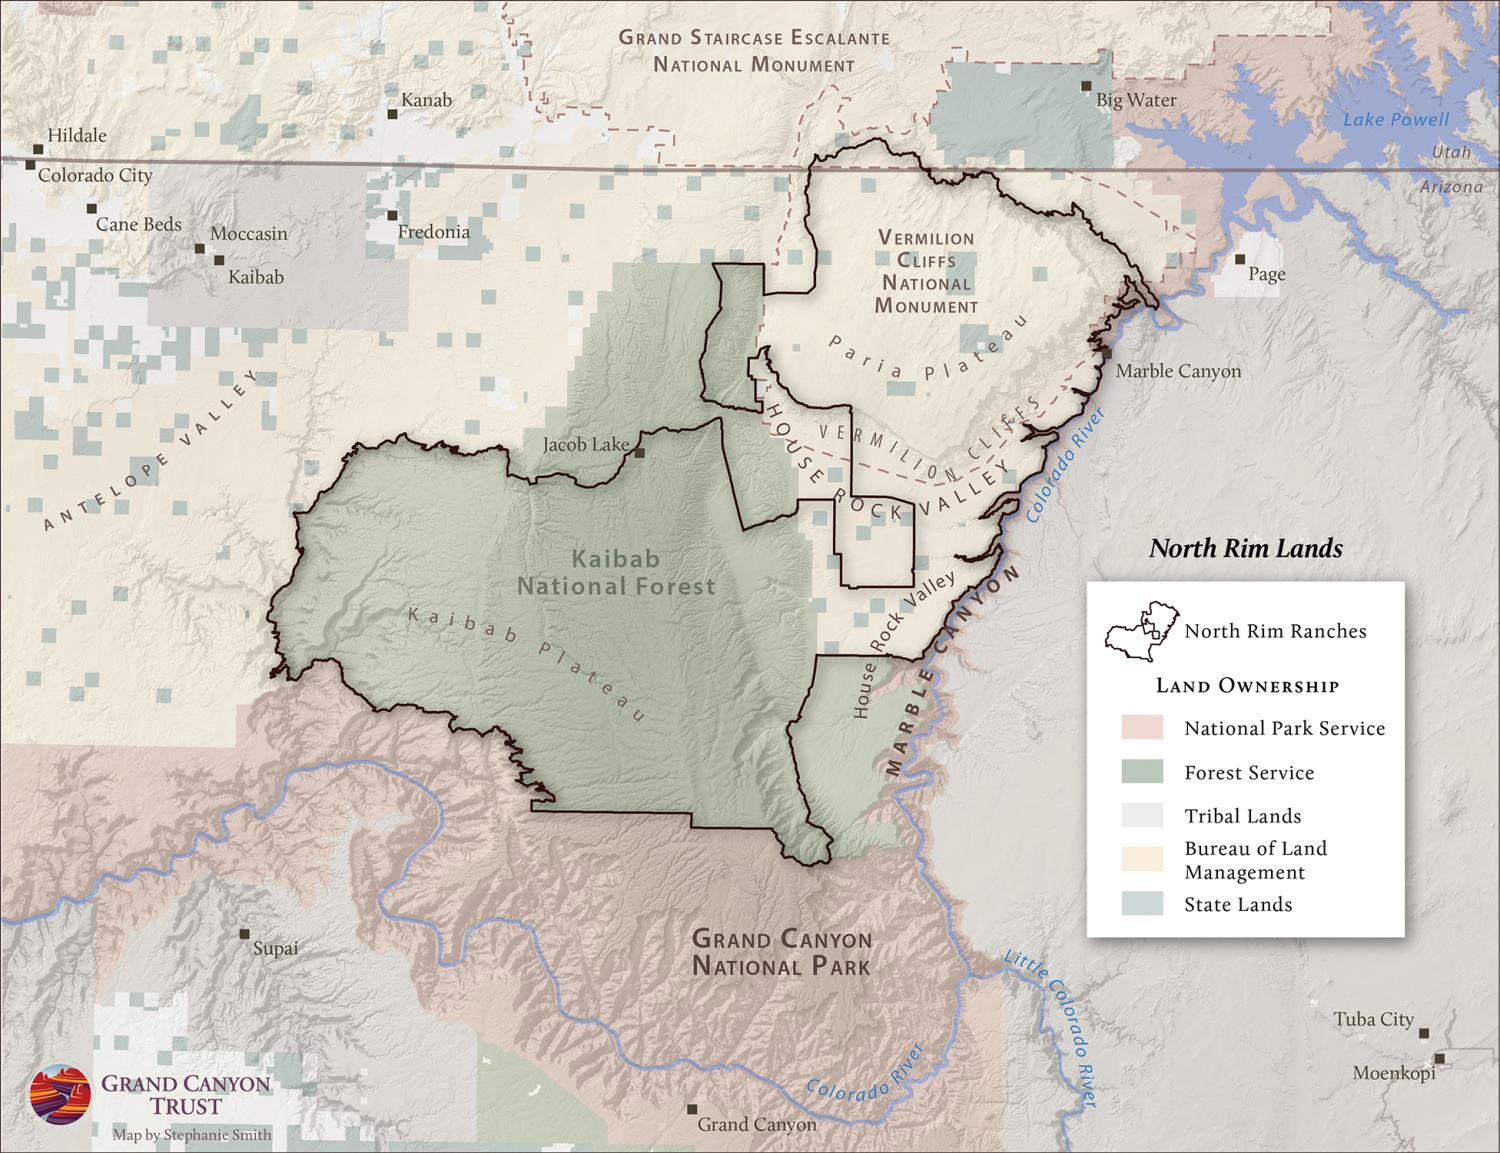 North Rim Ranches map